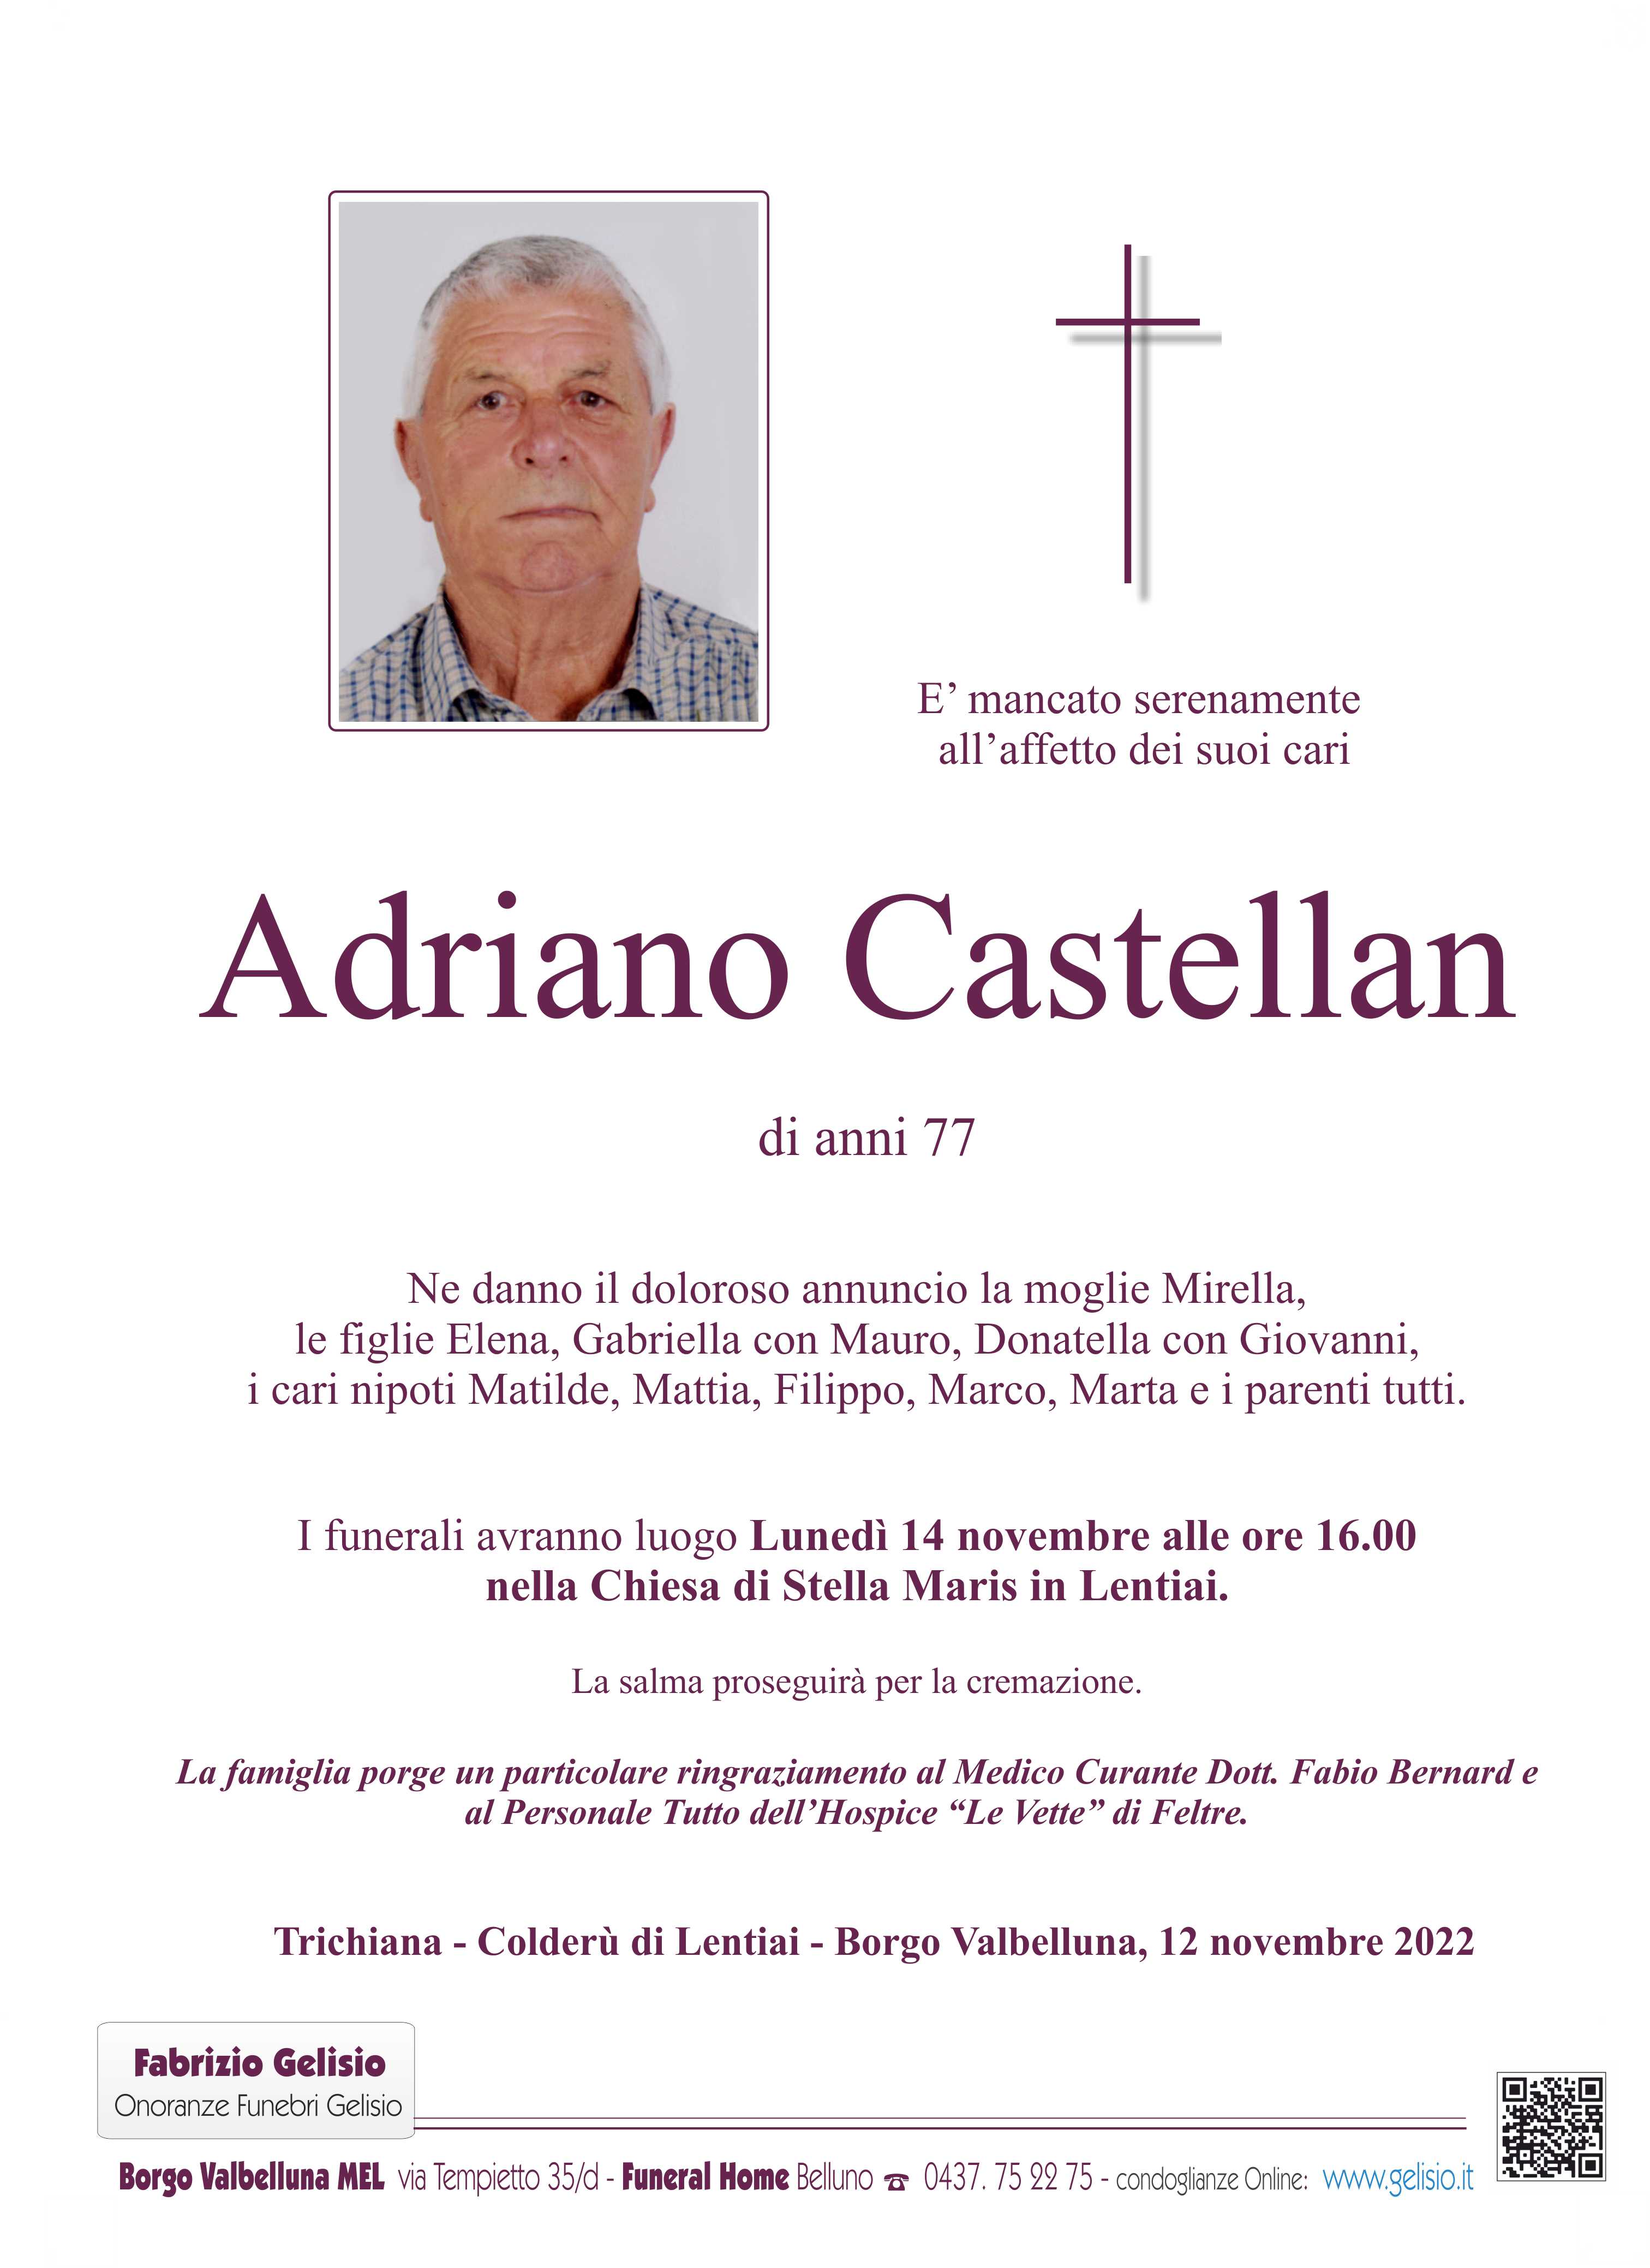 Castellan Adriano